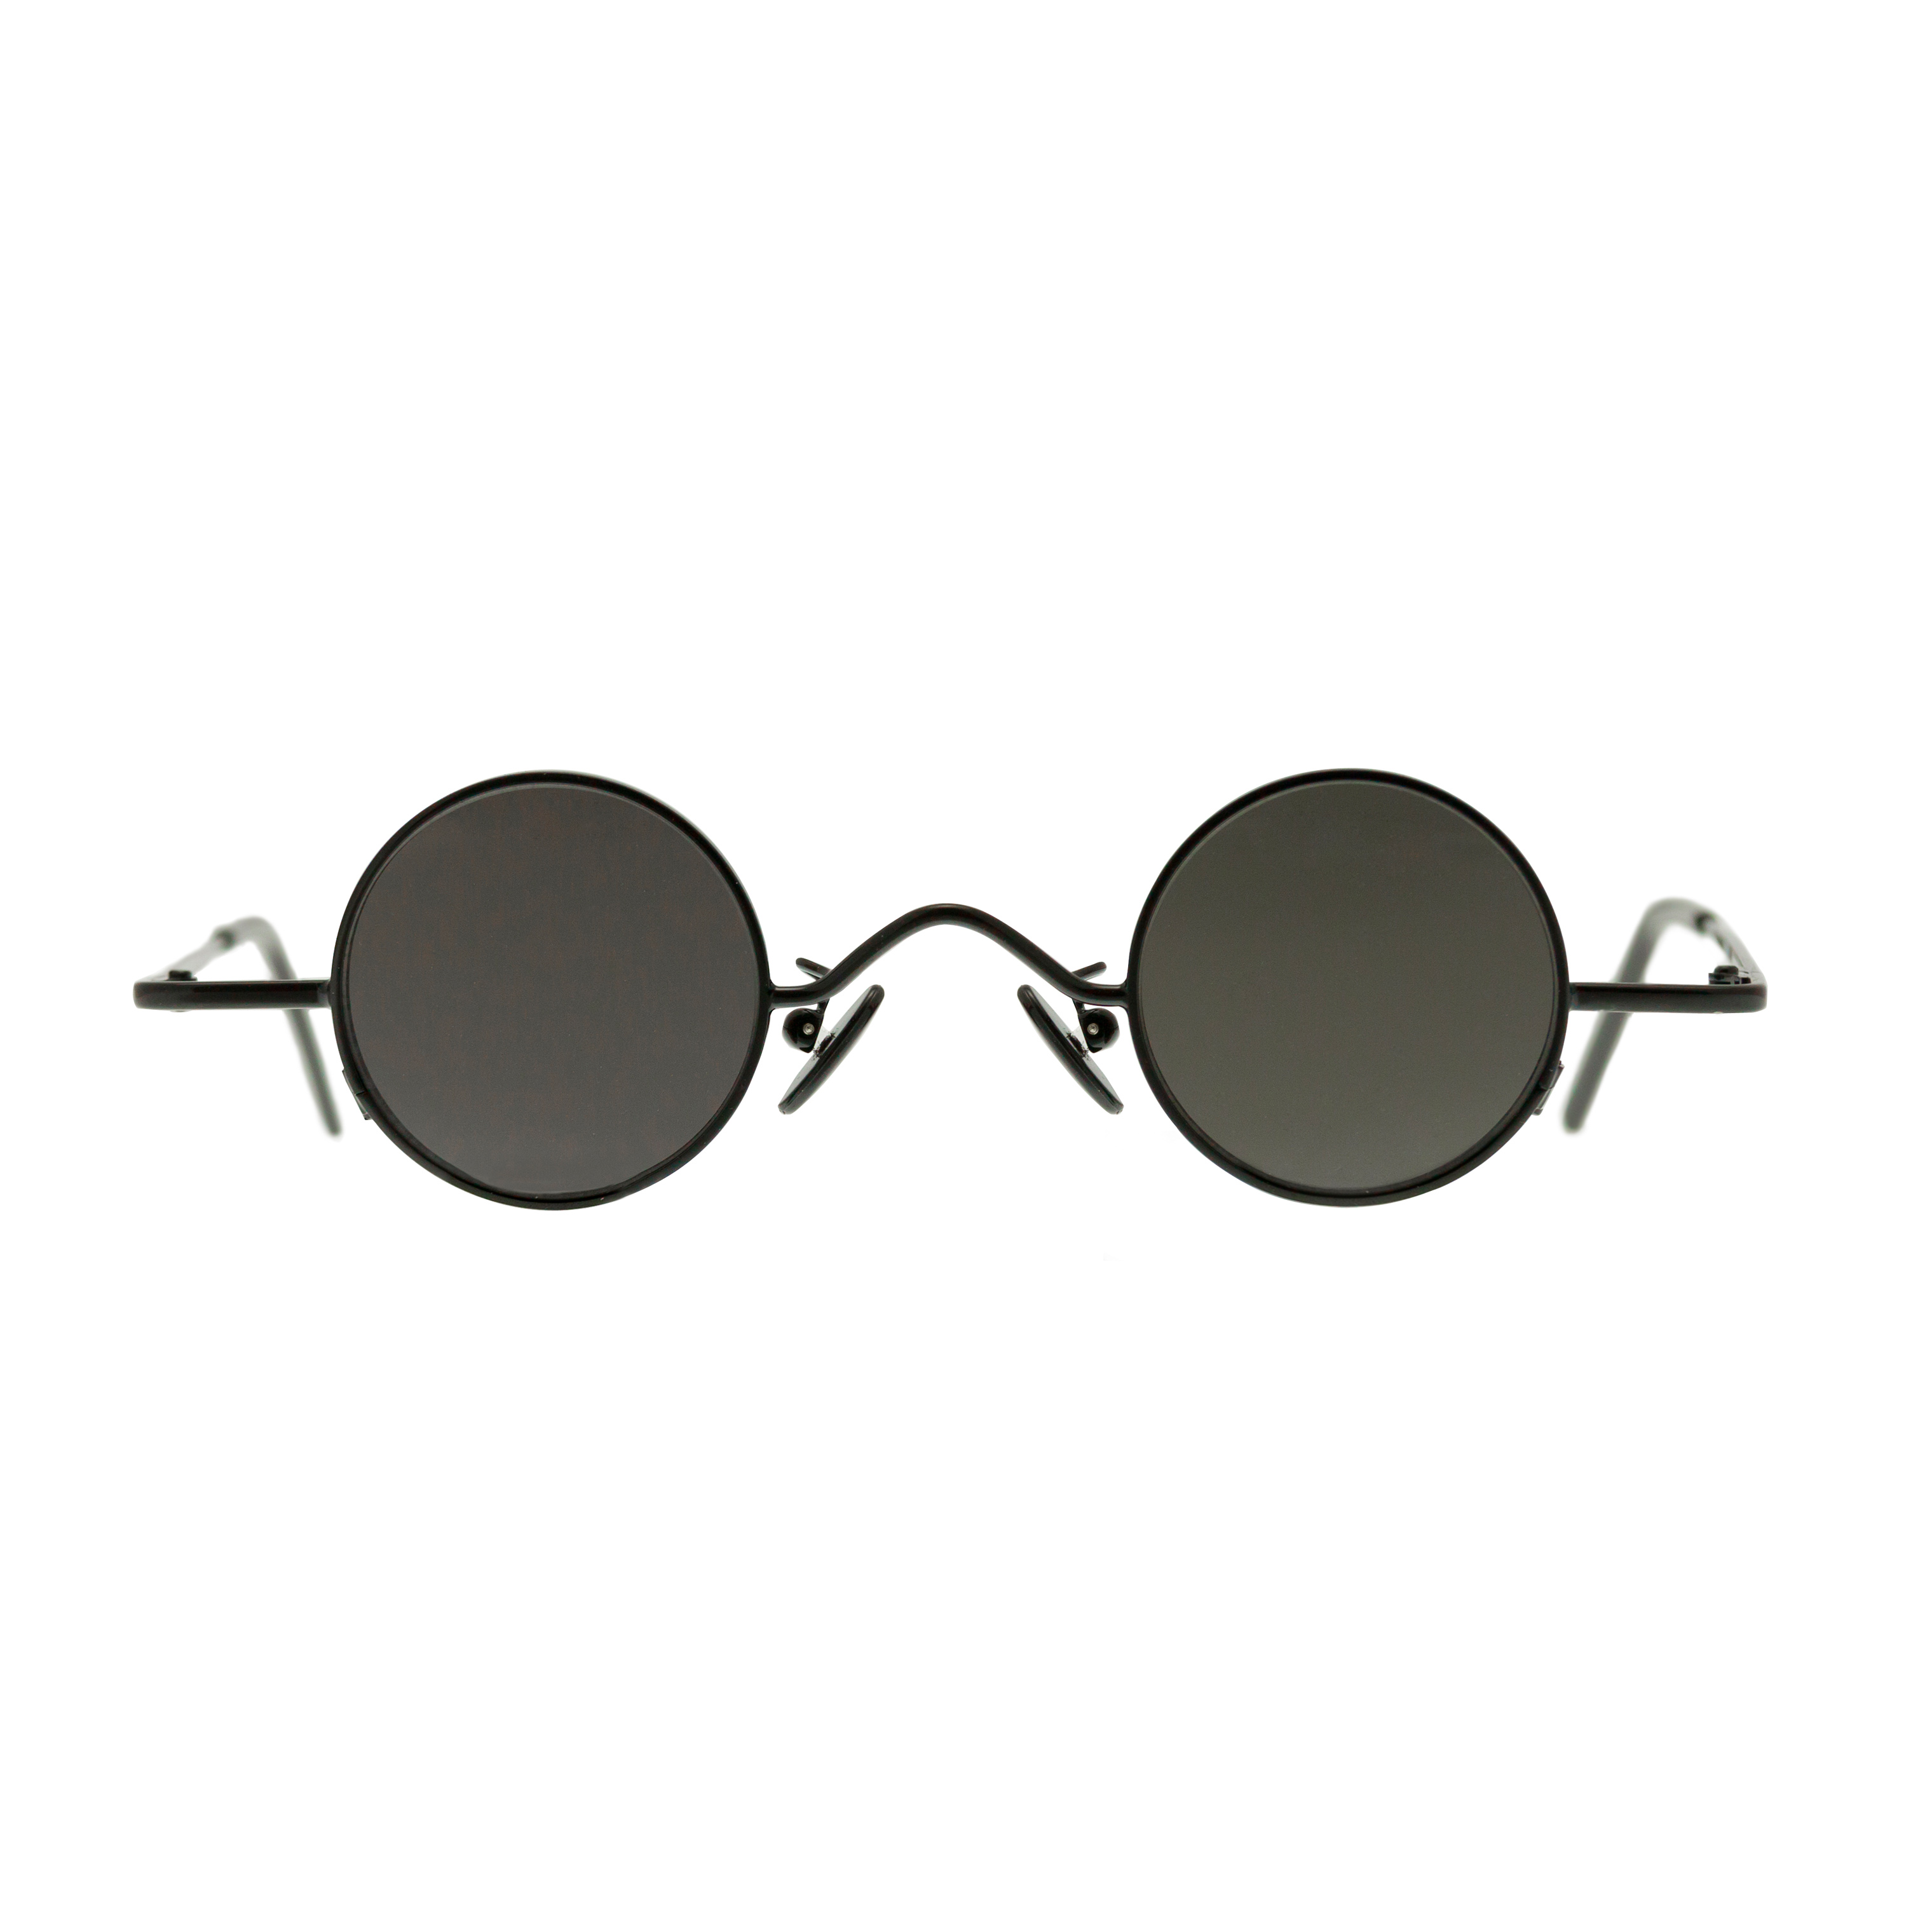 Il trio “futurista” di eyewear by KYME - Living Adamis